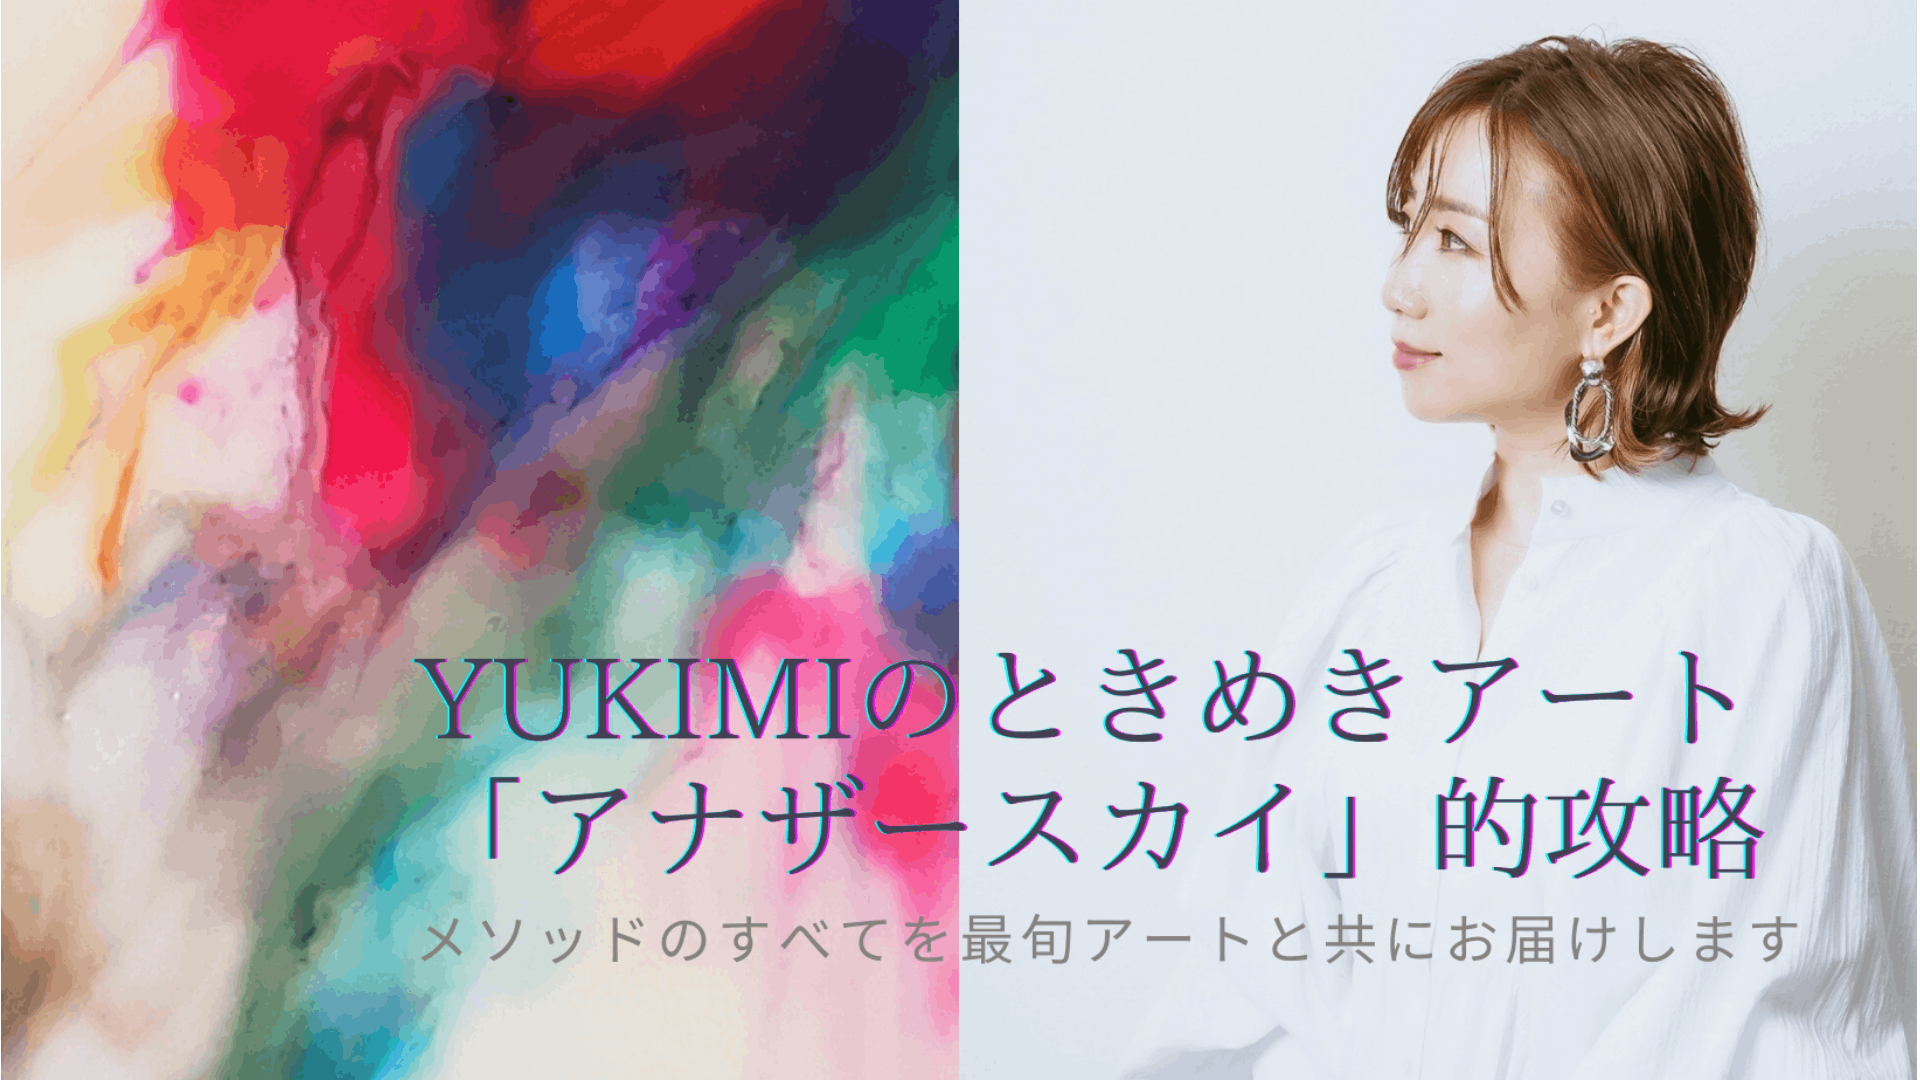 Yukimi - Yukimi流最旬アート攻略スペシャル講座 - DMMオンラインサロン